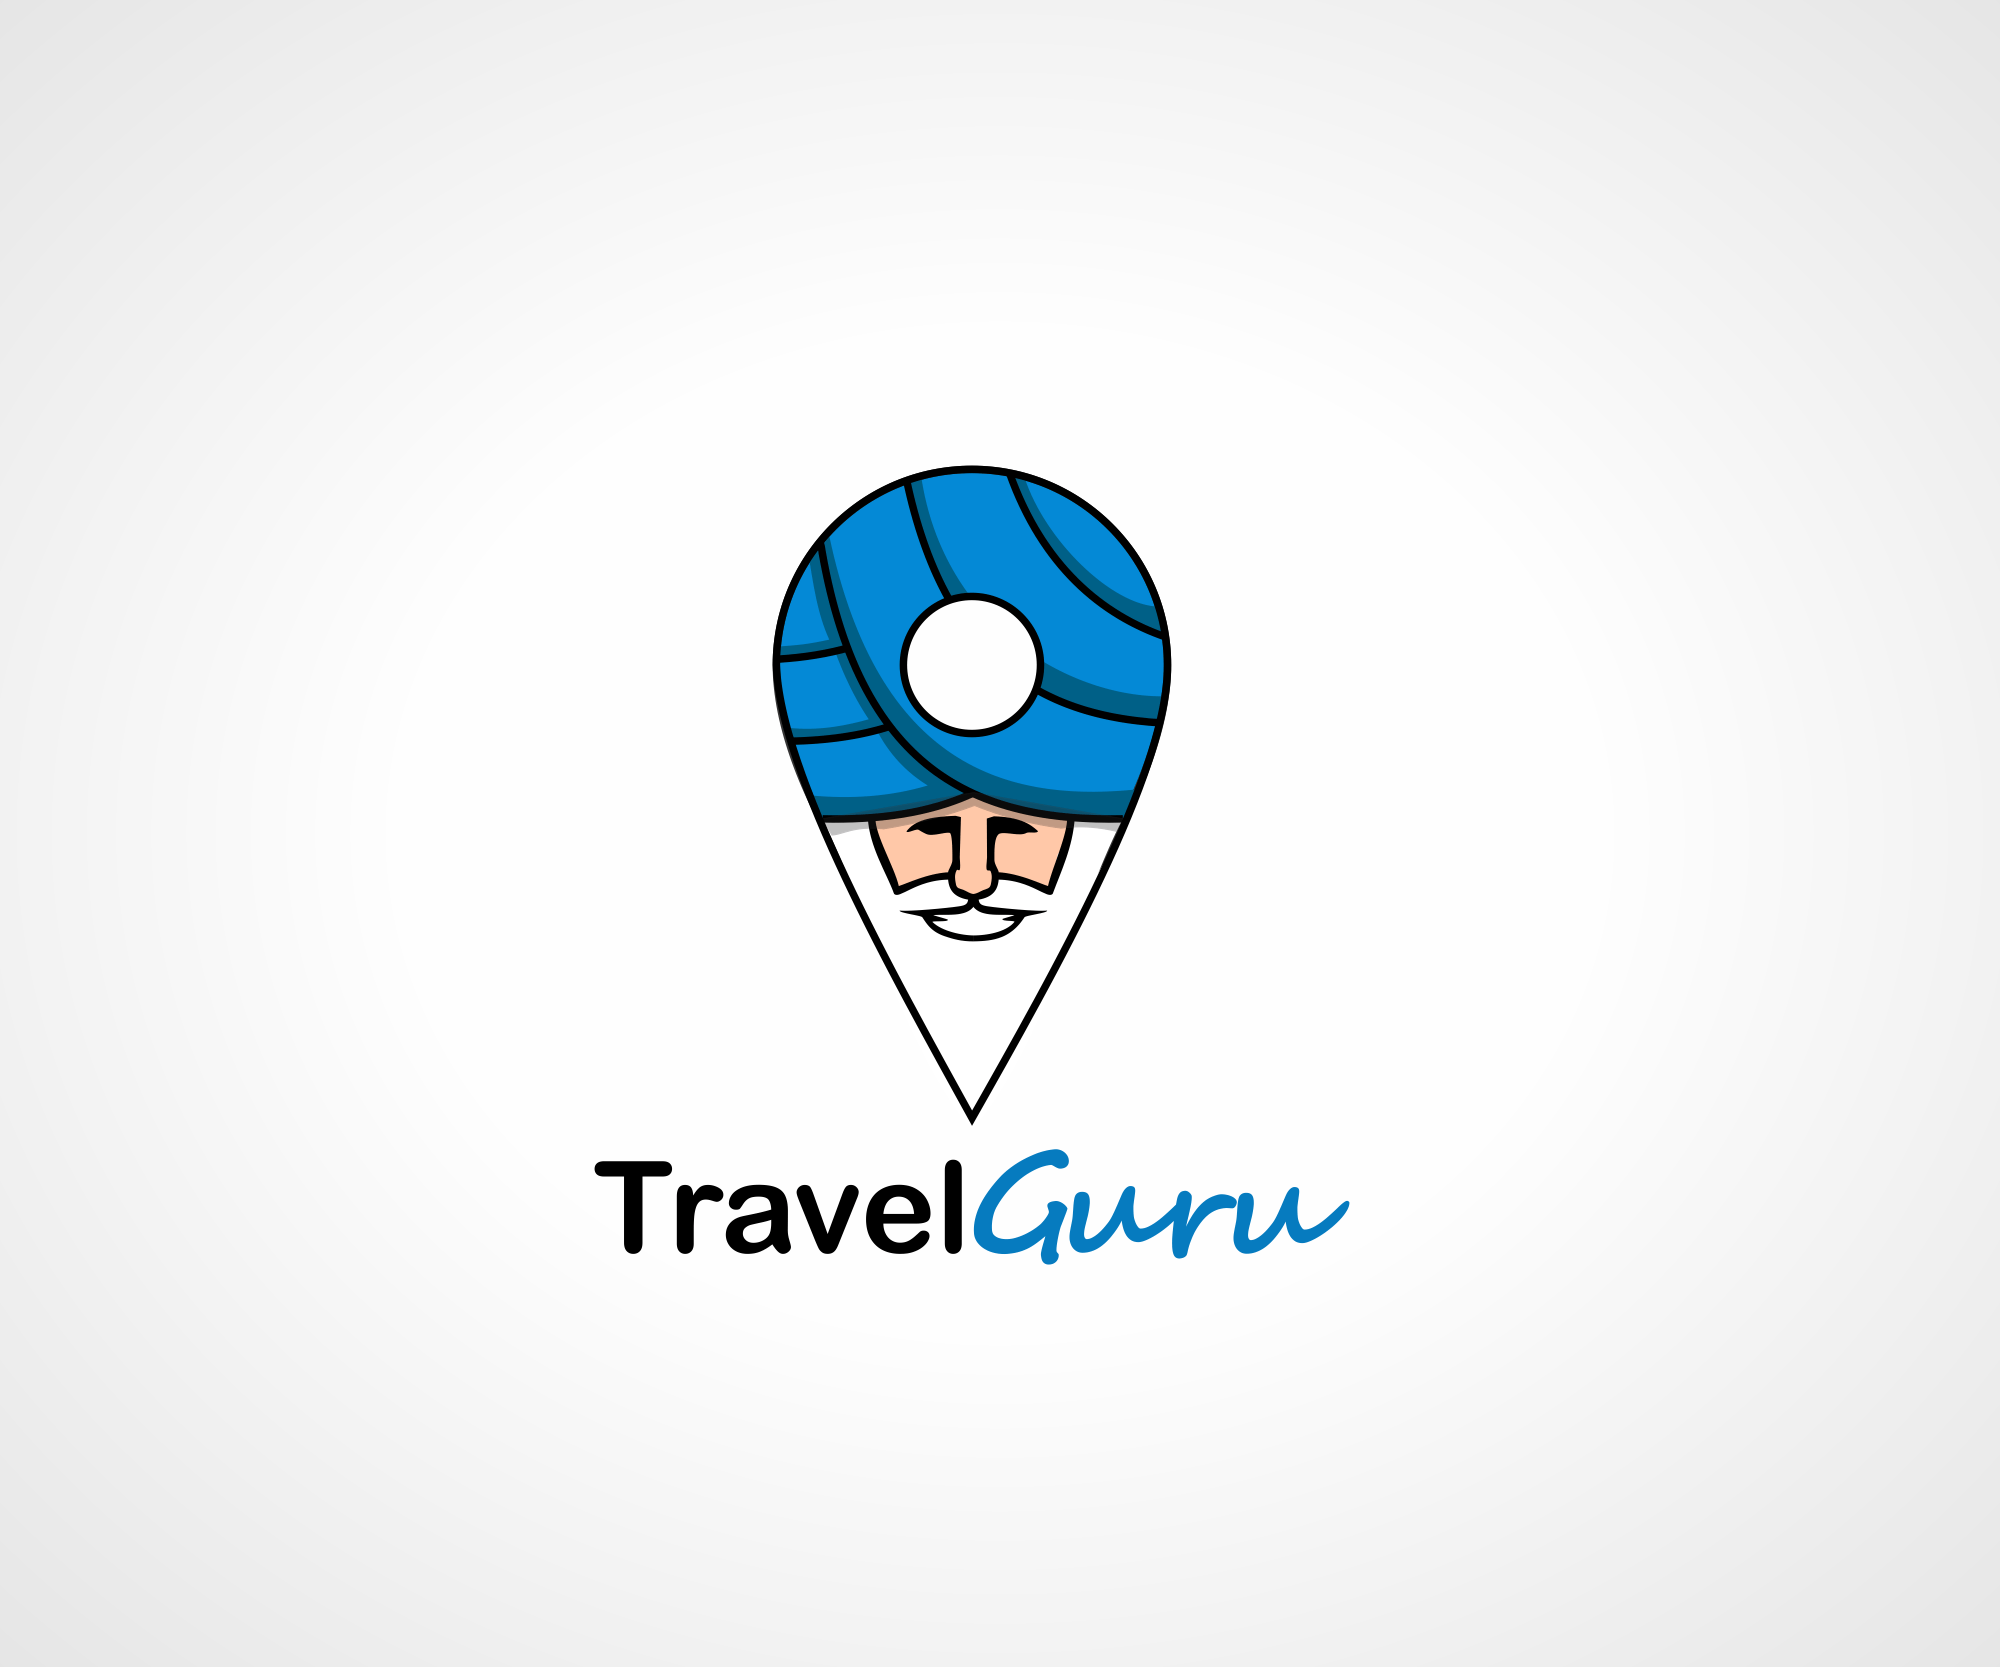 Guru Logo - Travel Guru logo | Logos | Pinterest | Logos, Logo design и Travel logo